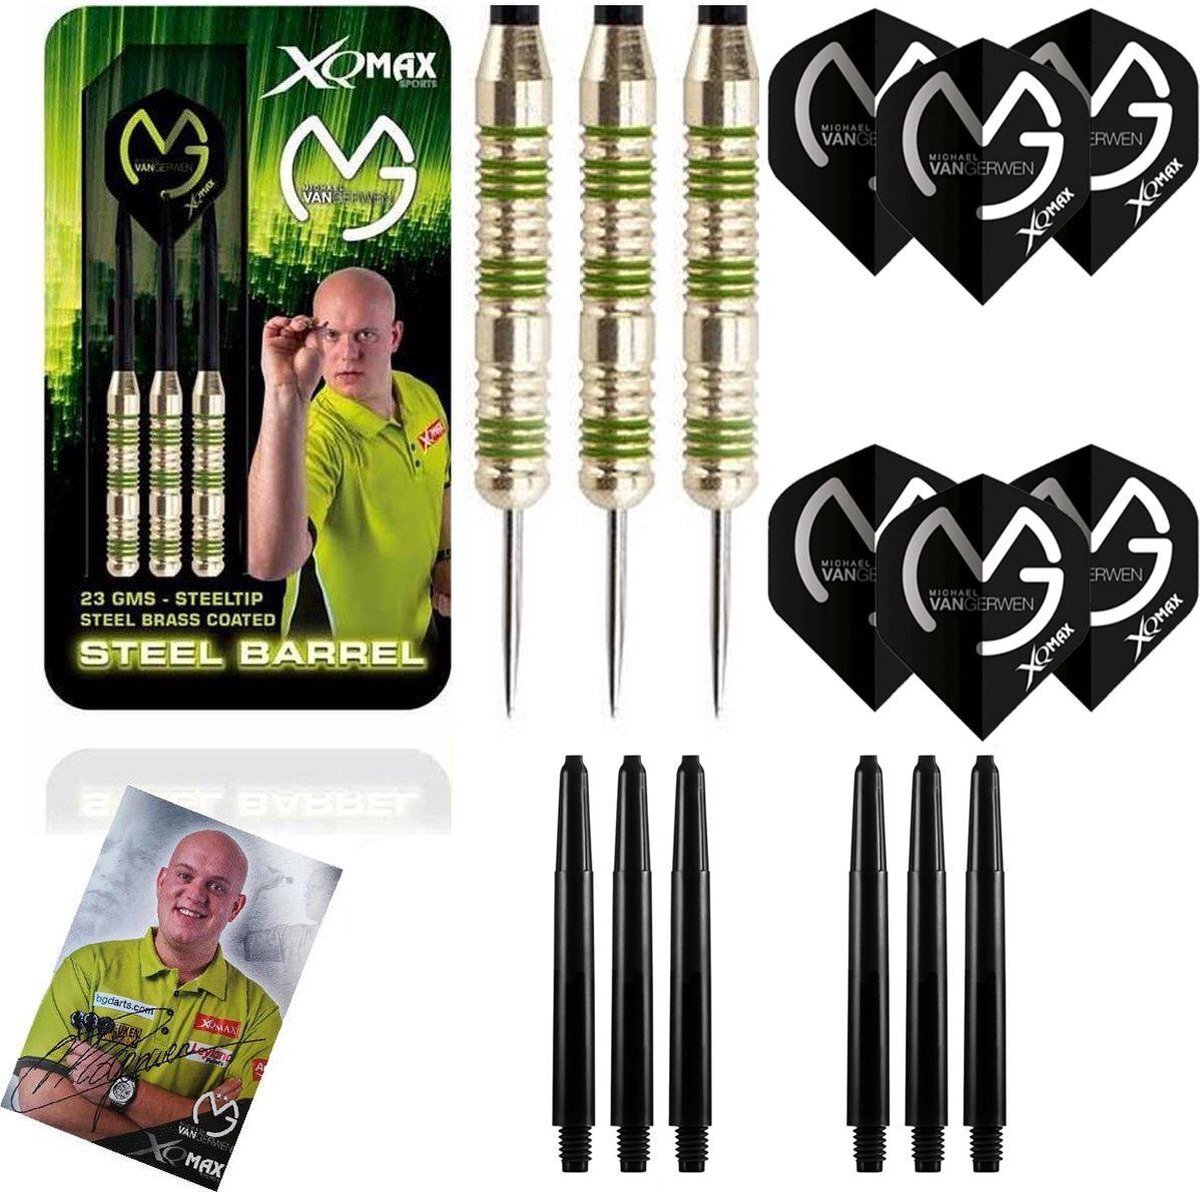 Dragon Darts Michael van Gerwen - steeldarts - green edition - 23 gram - dartpijlen - gesigneerde foto - 6 dartshafts + 6 dartflights